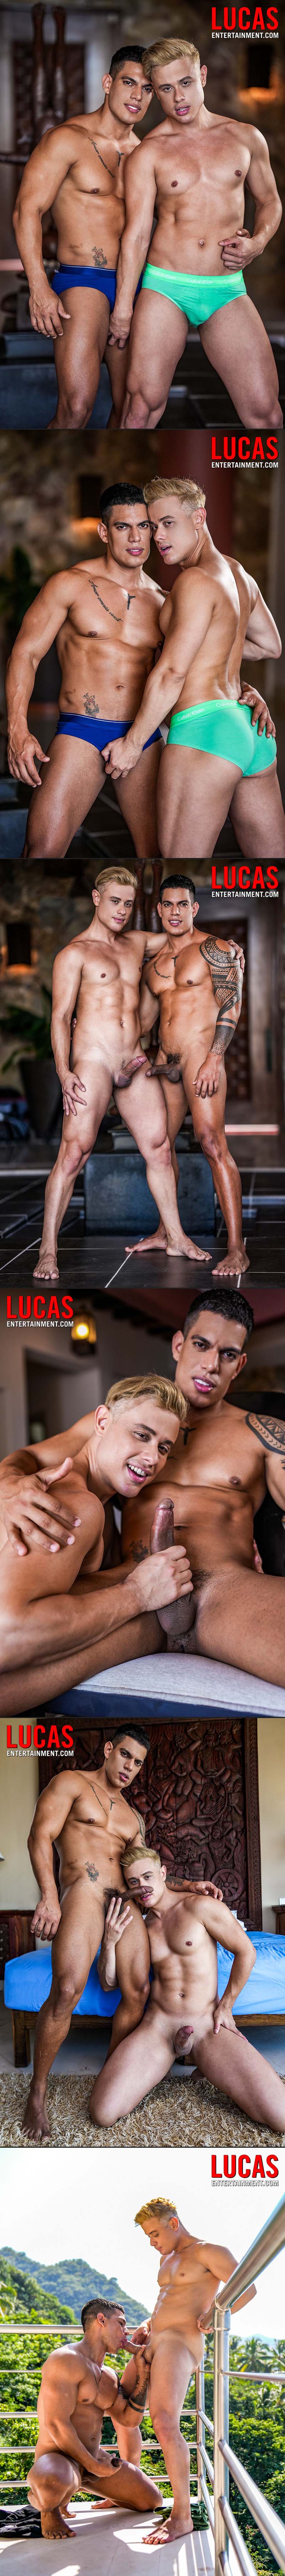 Lucas Men: Ganged And Banged, Scene 3 (Bruno Galvez Plows Alam Wernik) at LucasEntertainment